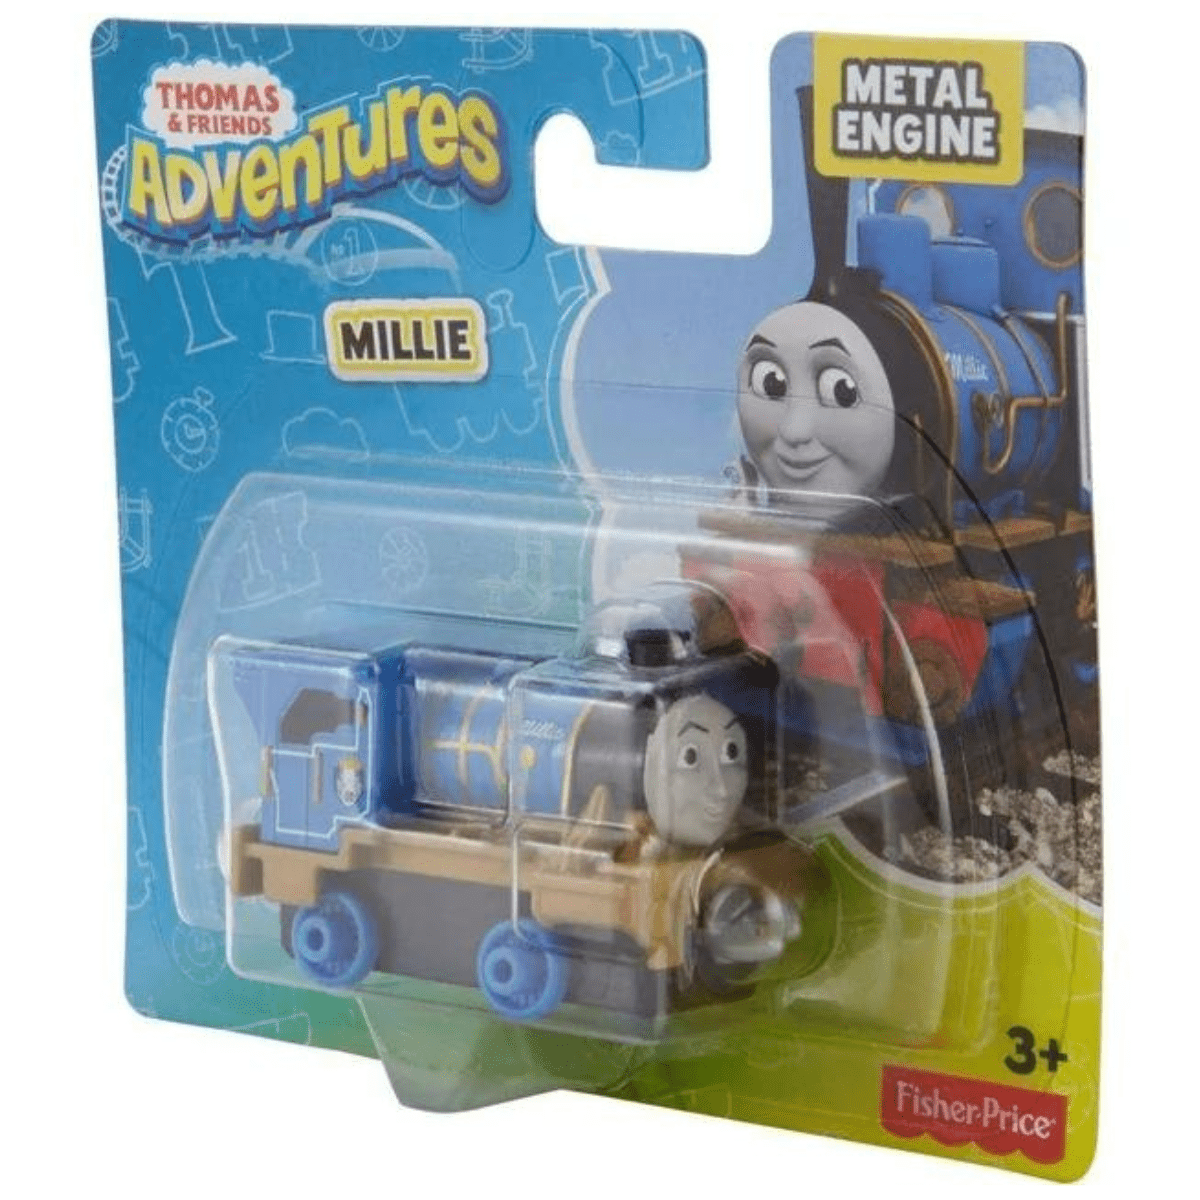 Thomas & Friends Adventures - Millie